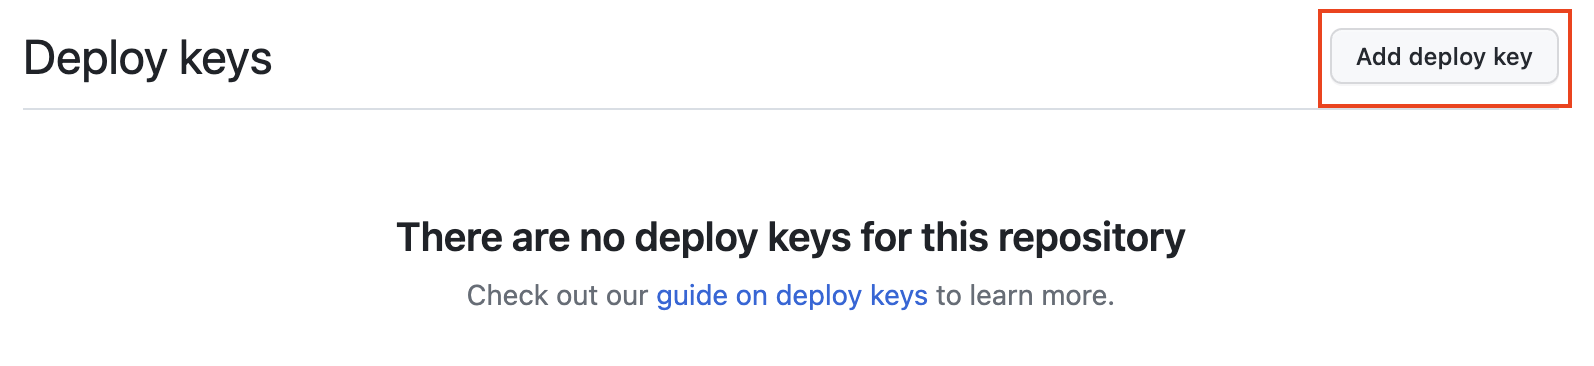 new_deploy_key_button